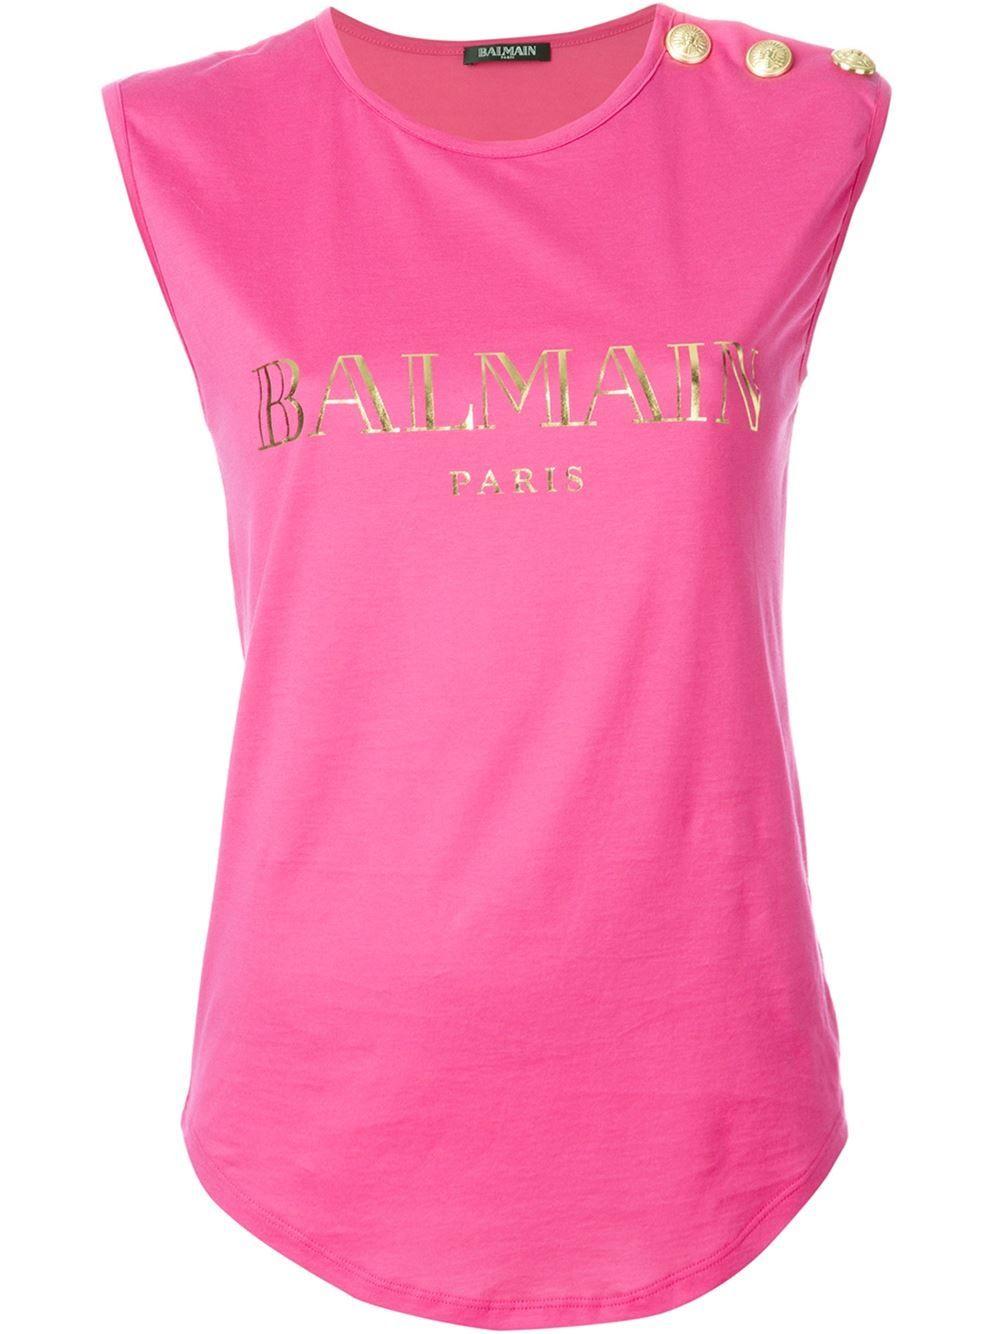 Top Pink Logo - Balmain Logo Print Tank Top in Pink - Lyst